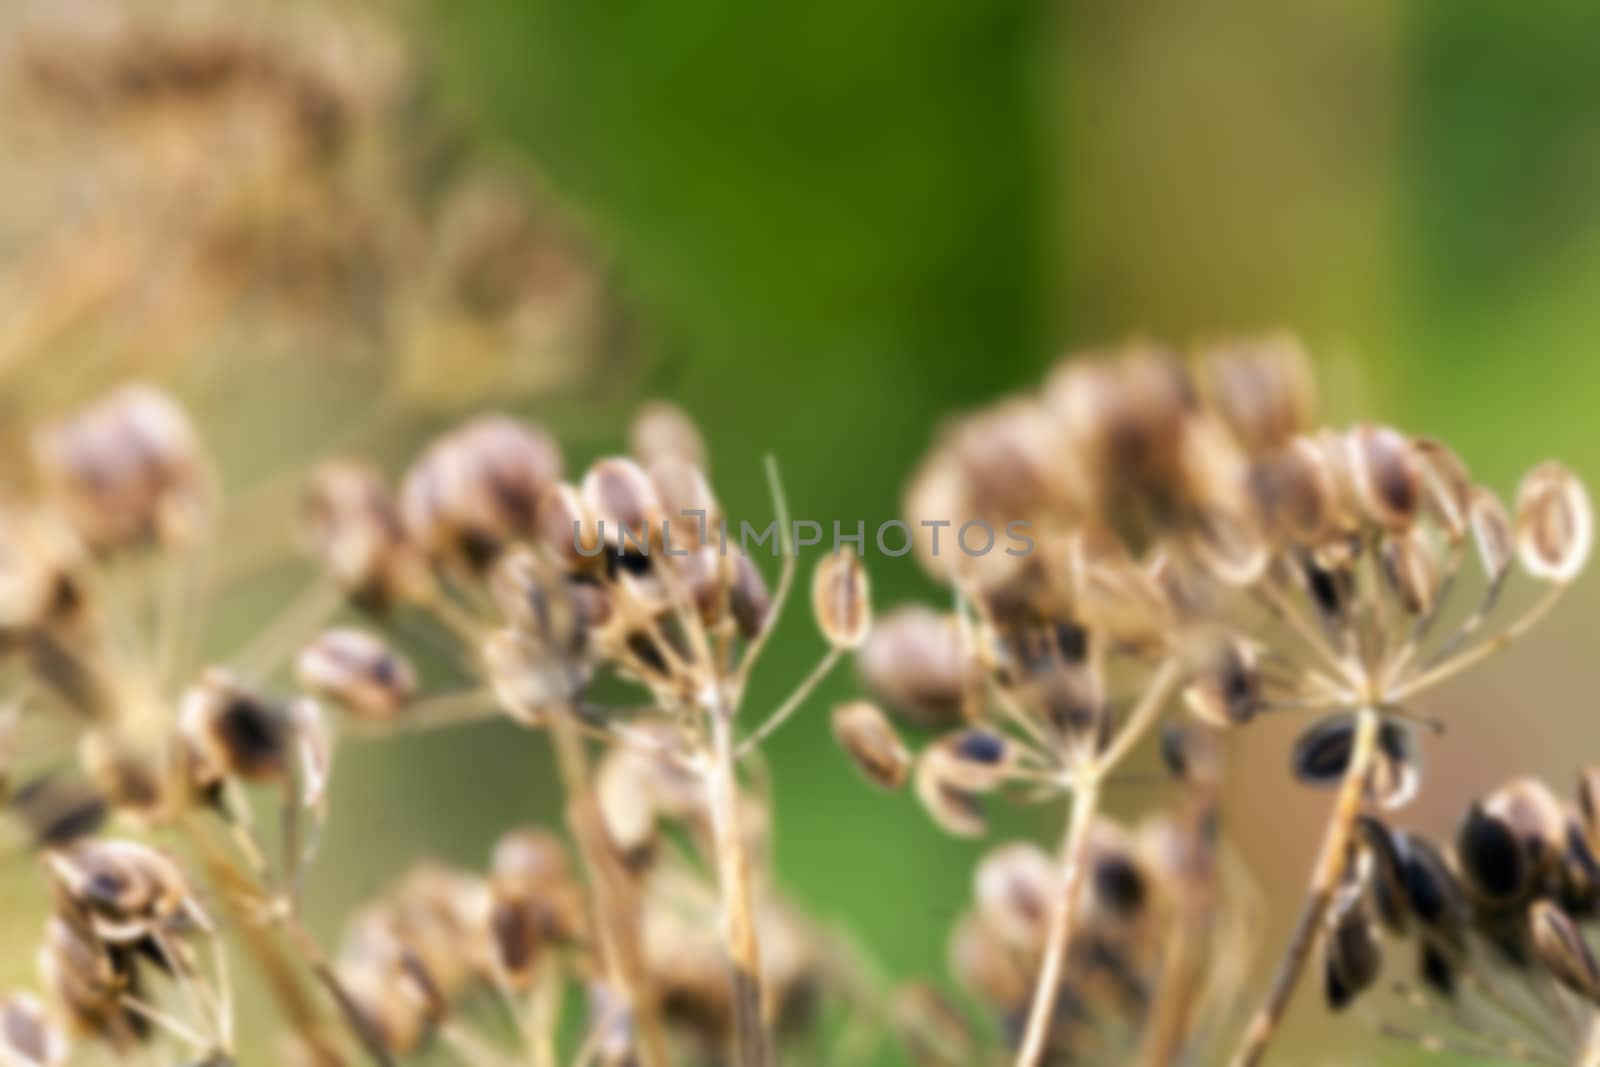 brown fennel stalk by avq